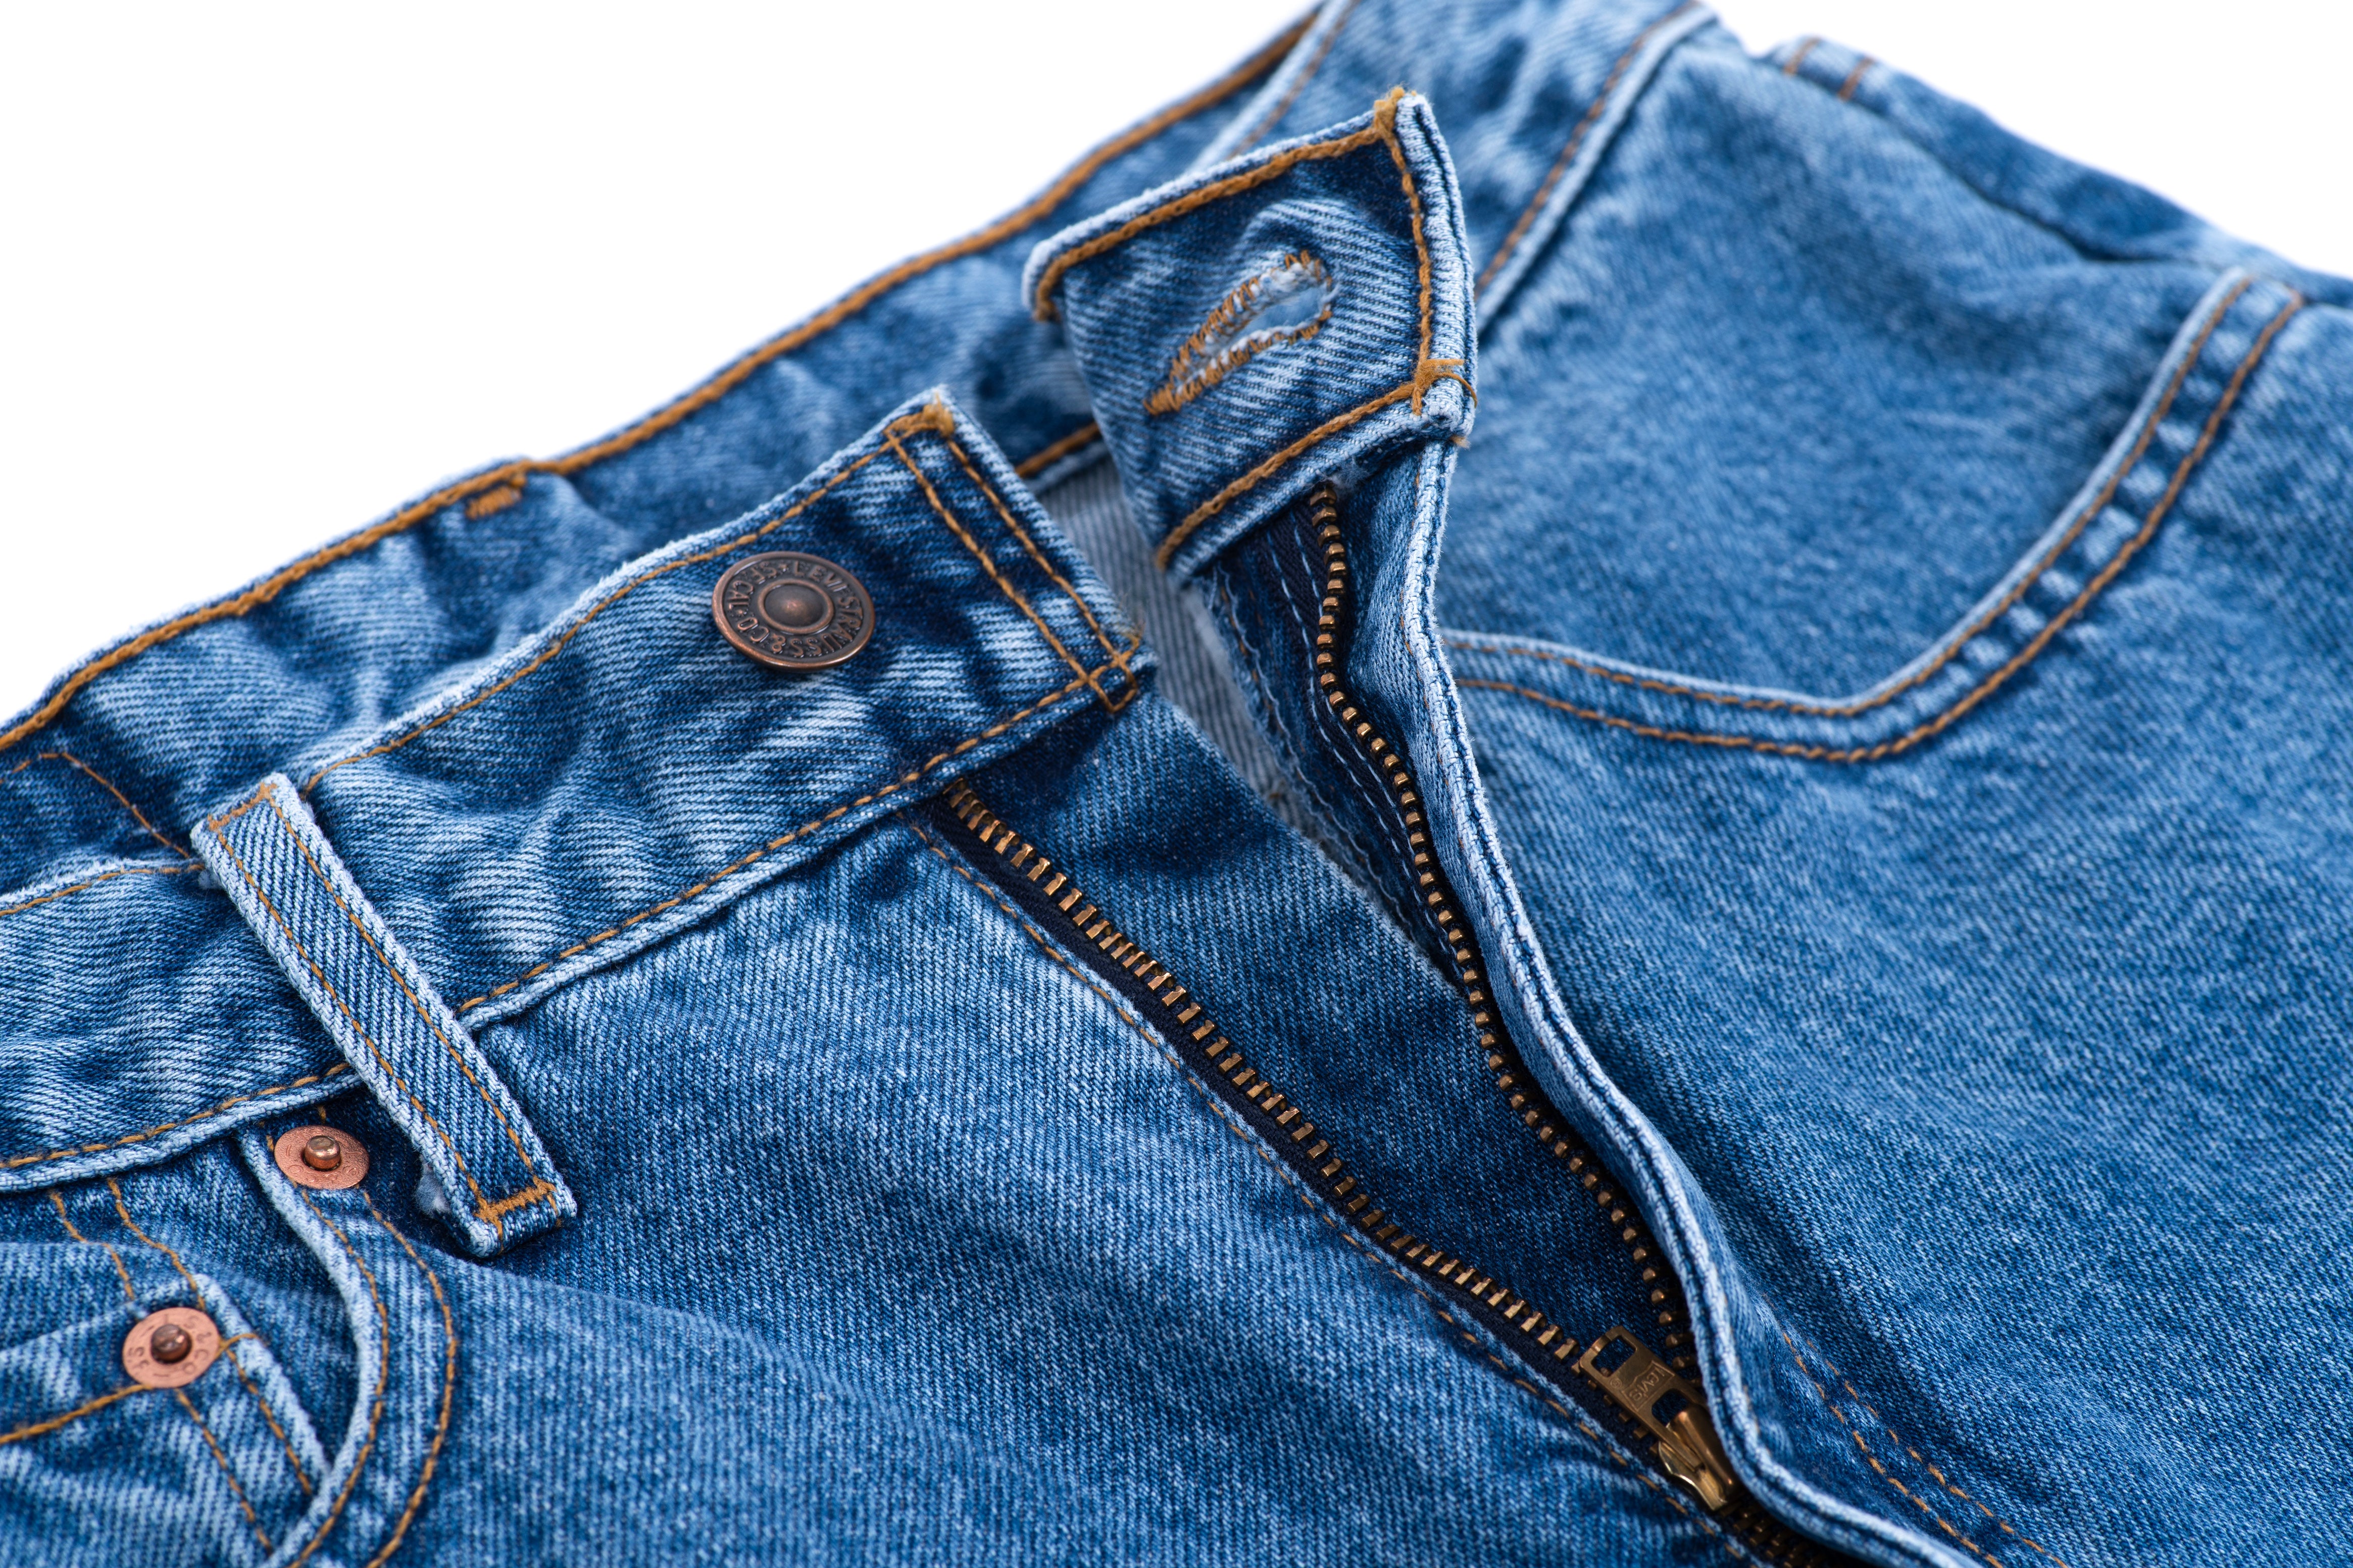 Levi’s 881 Vintage Orange Tab Light Blue Mom Fit Jeans W30/L32